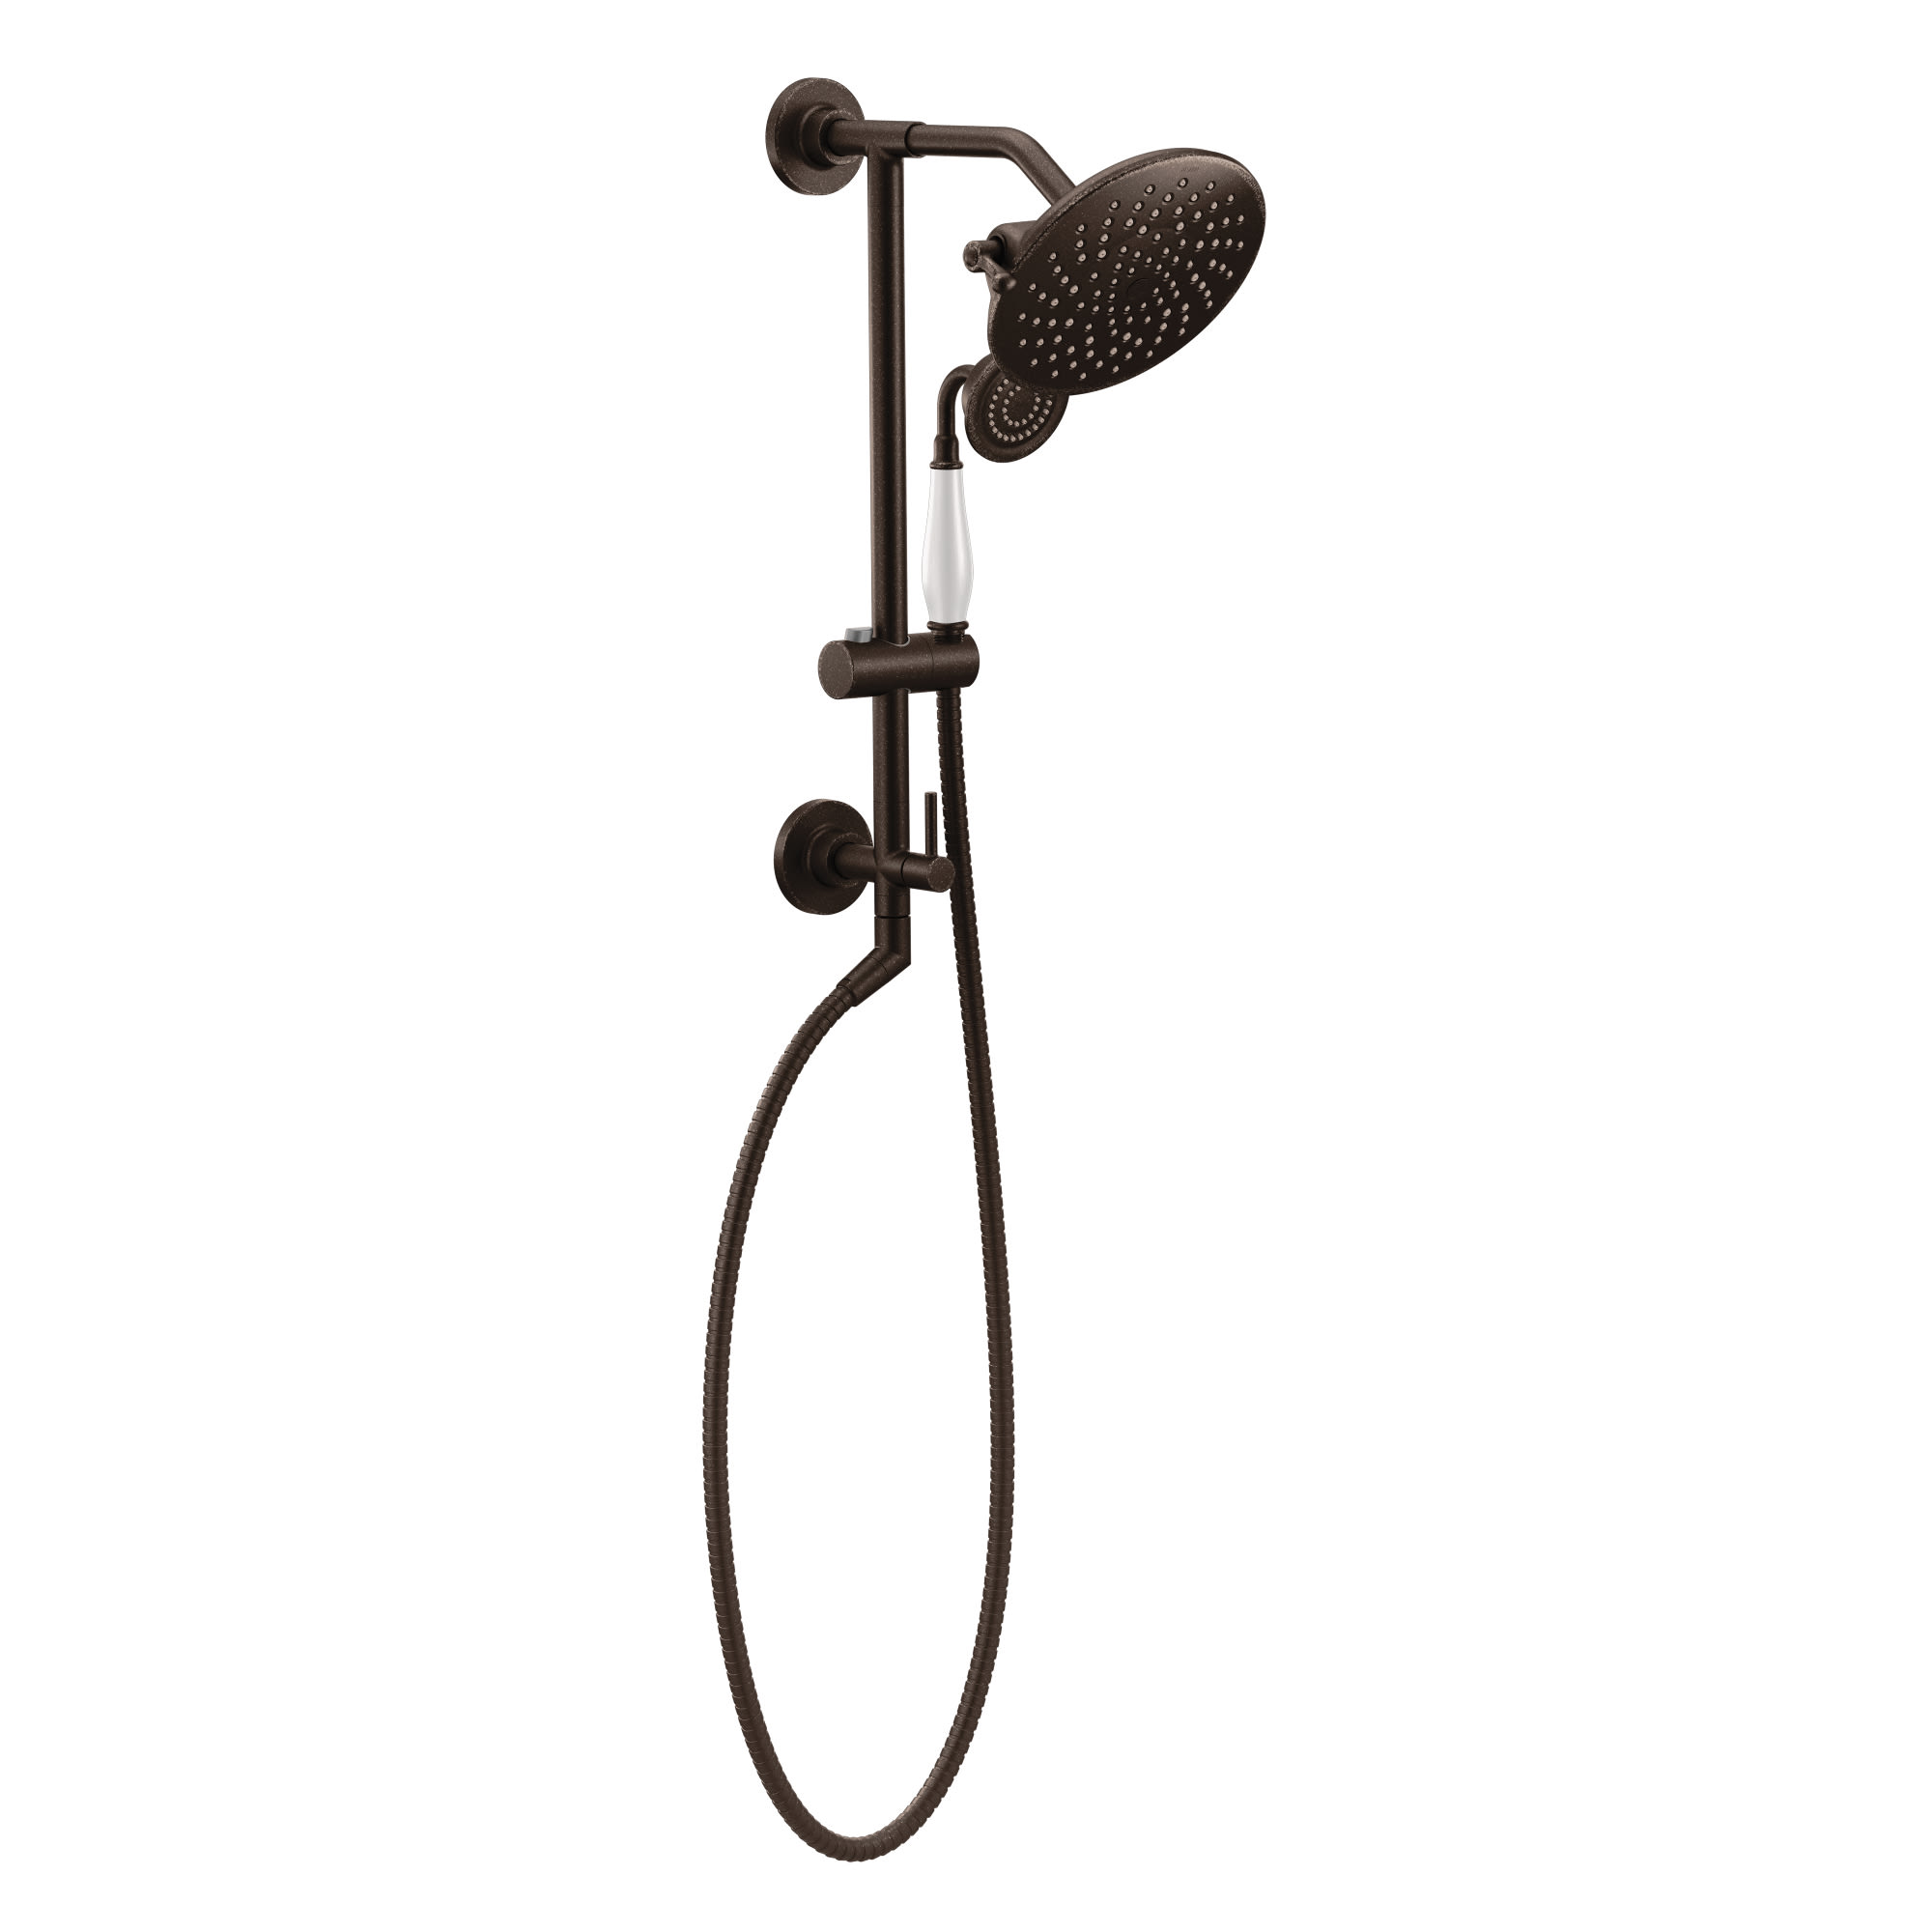 Oil Rubbed Bronze Rain Shower System with Handshower and Adjustable Slide Bar 